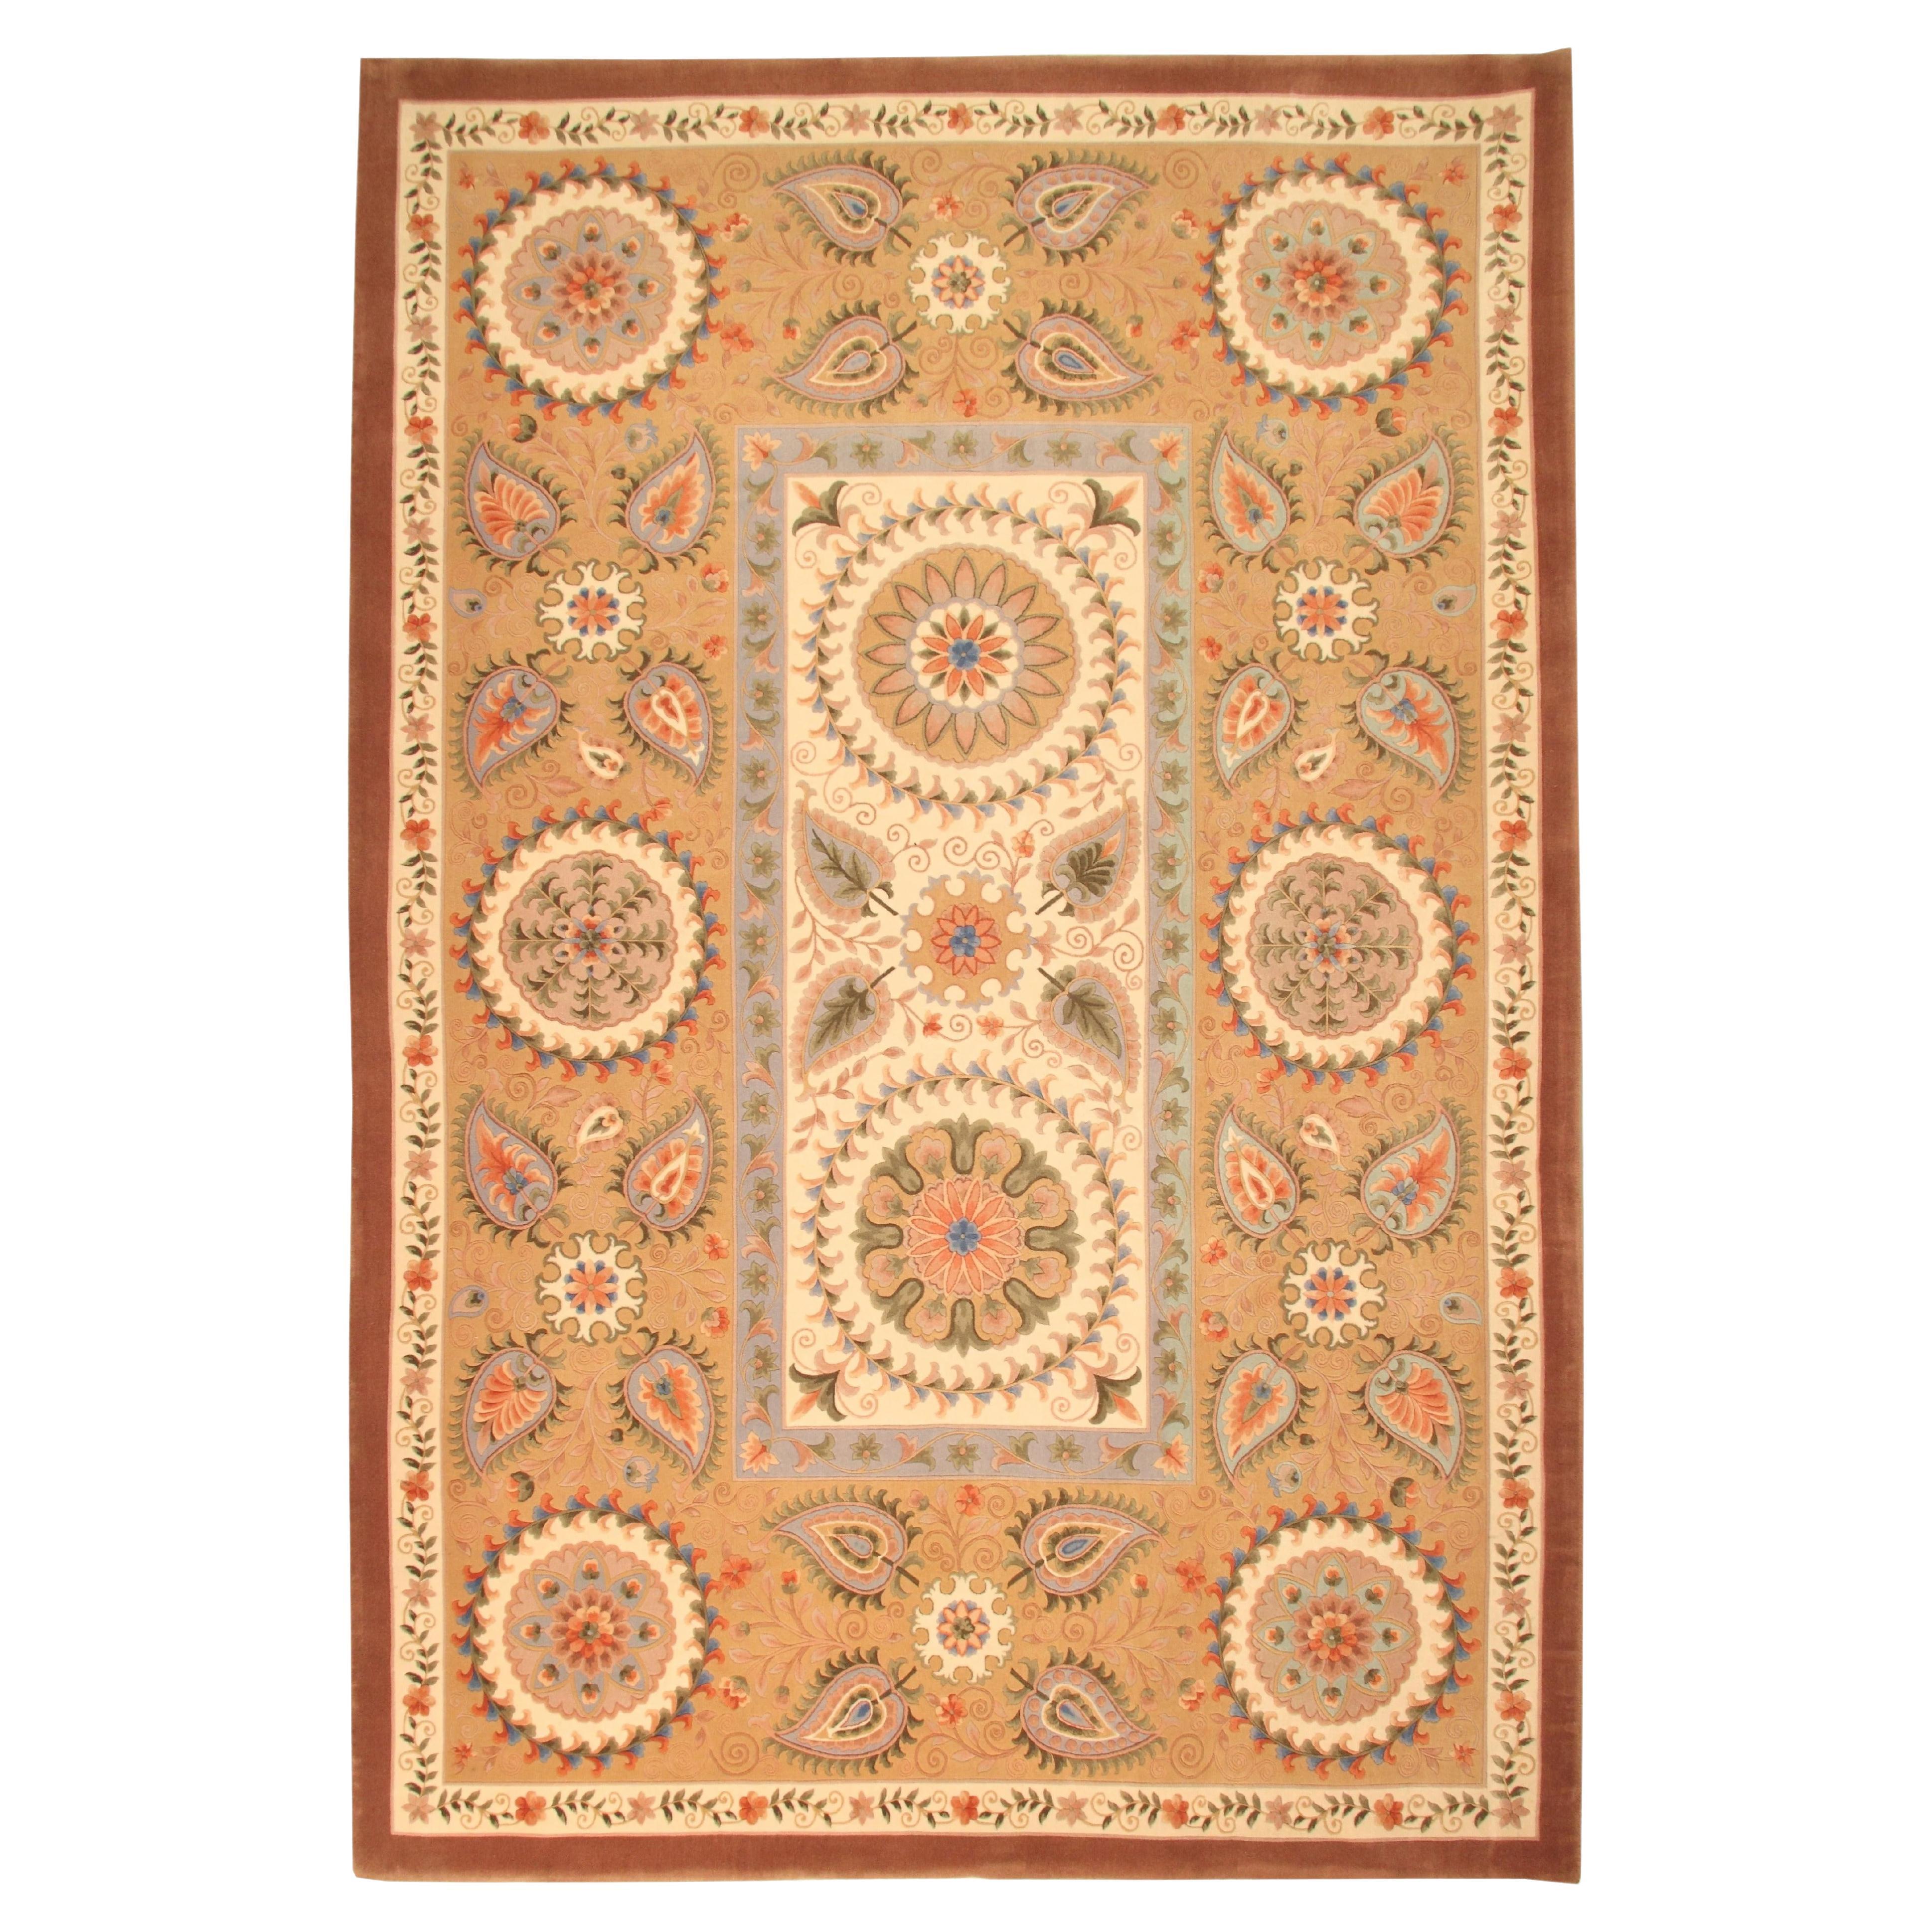 VIA COMO - ' Suzanni Two Flowers' Rug Carpet Vintage Wool Silk 6'7" x 9'10" RARE